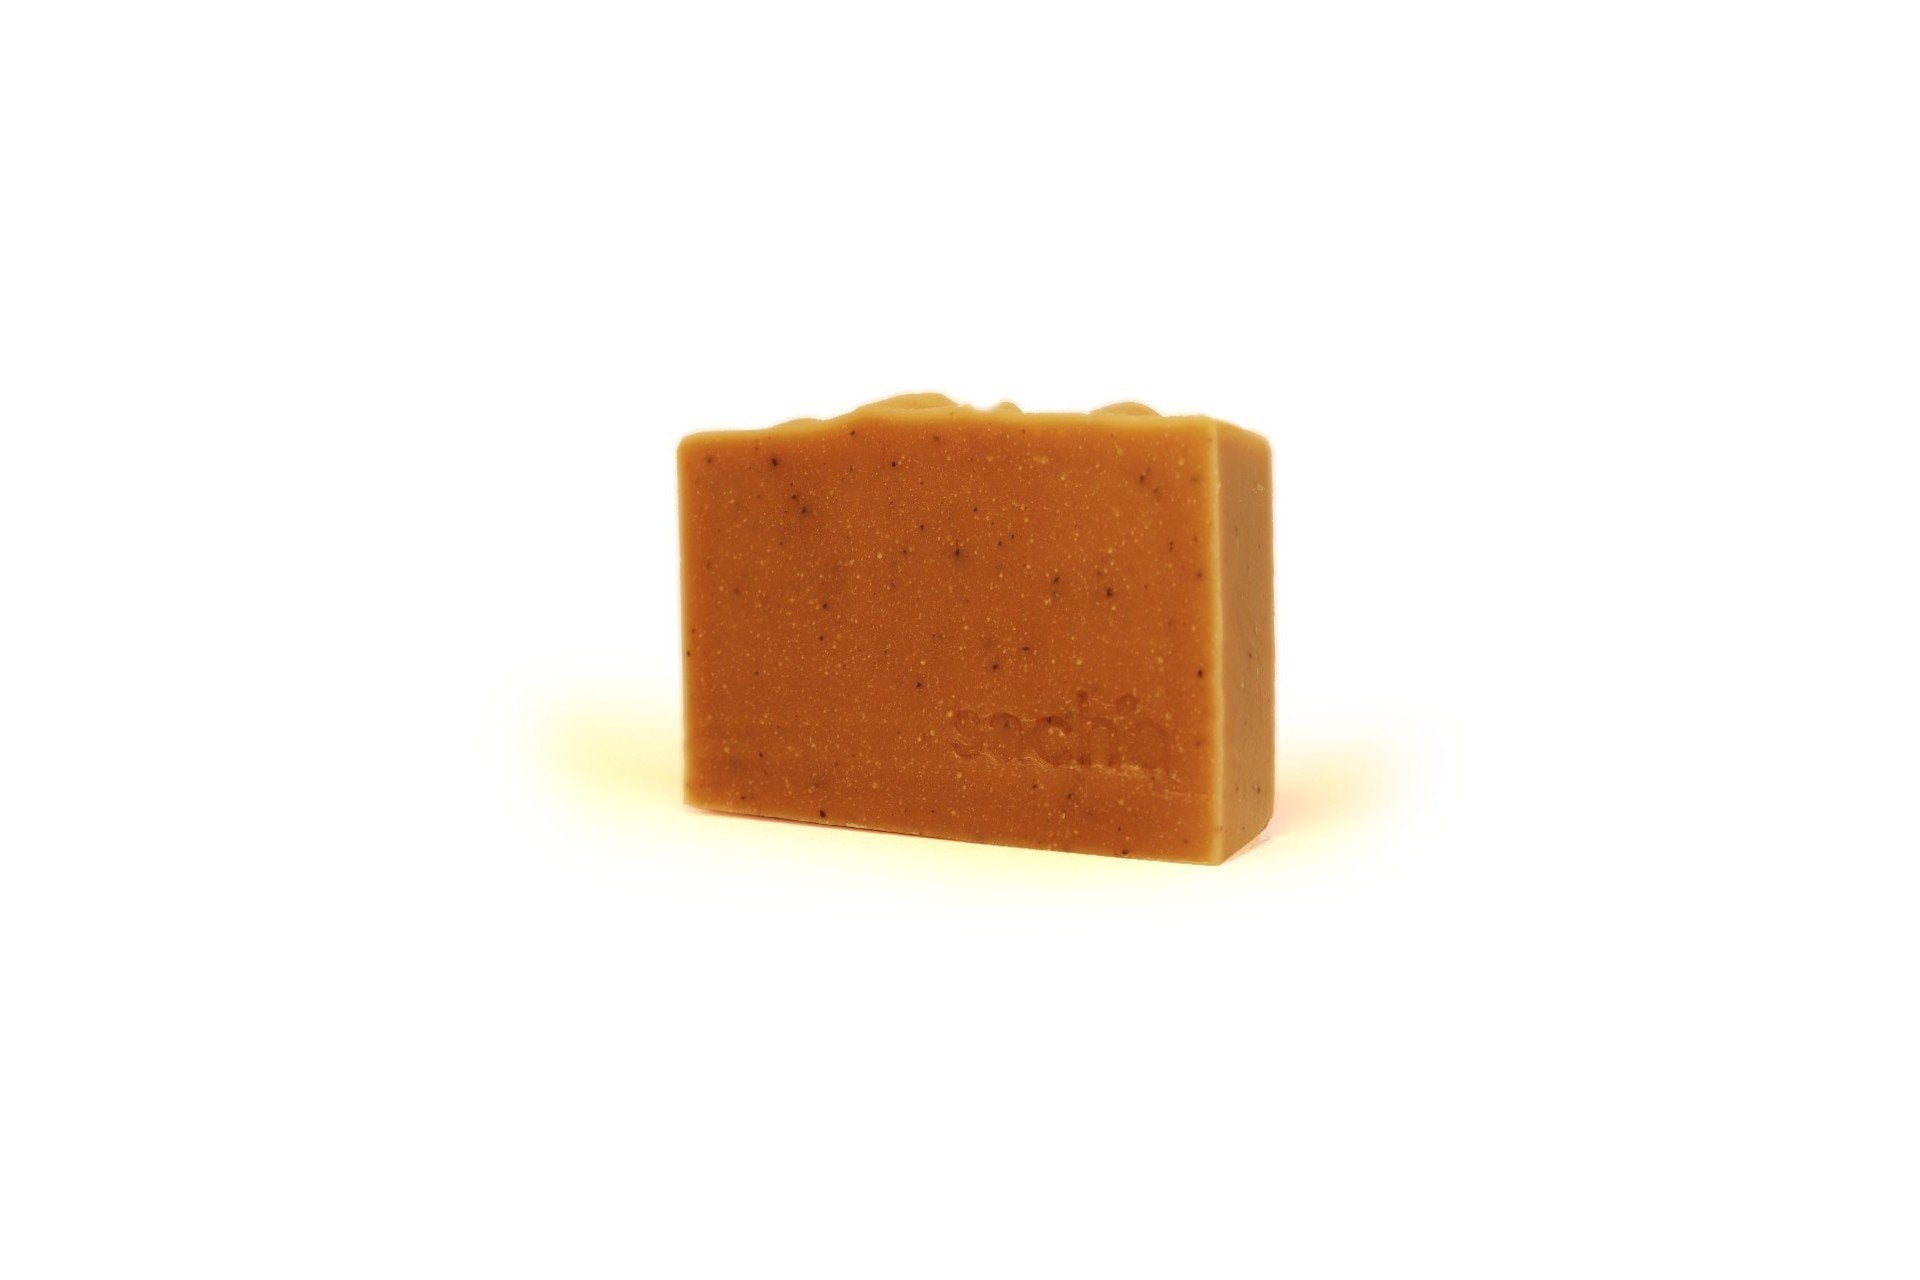 Scrubby coffee body soap